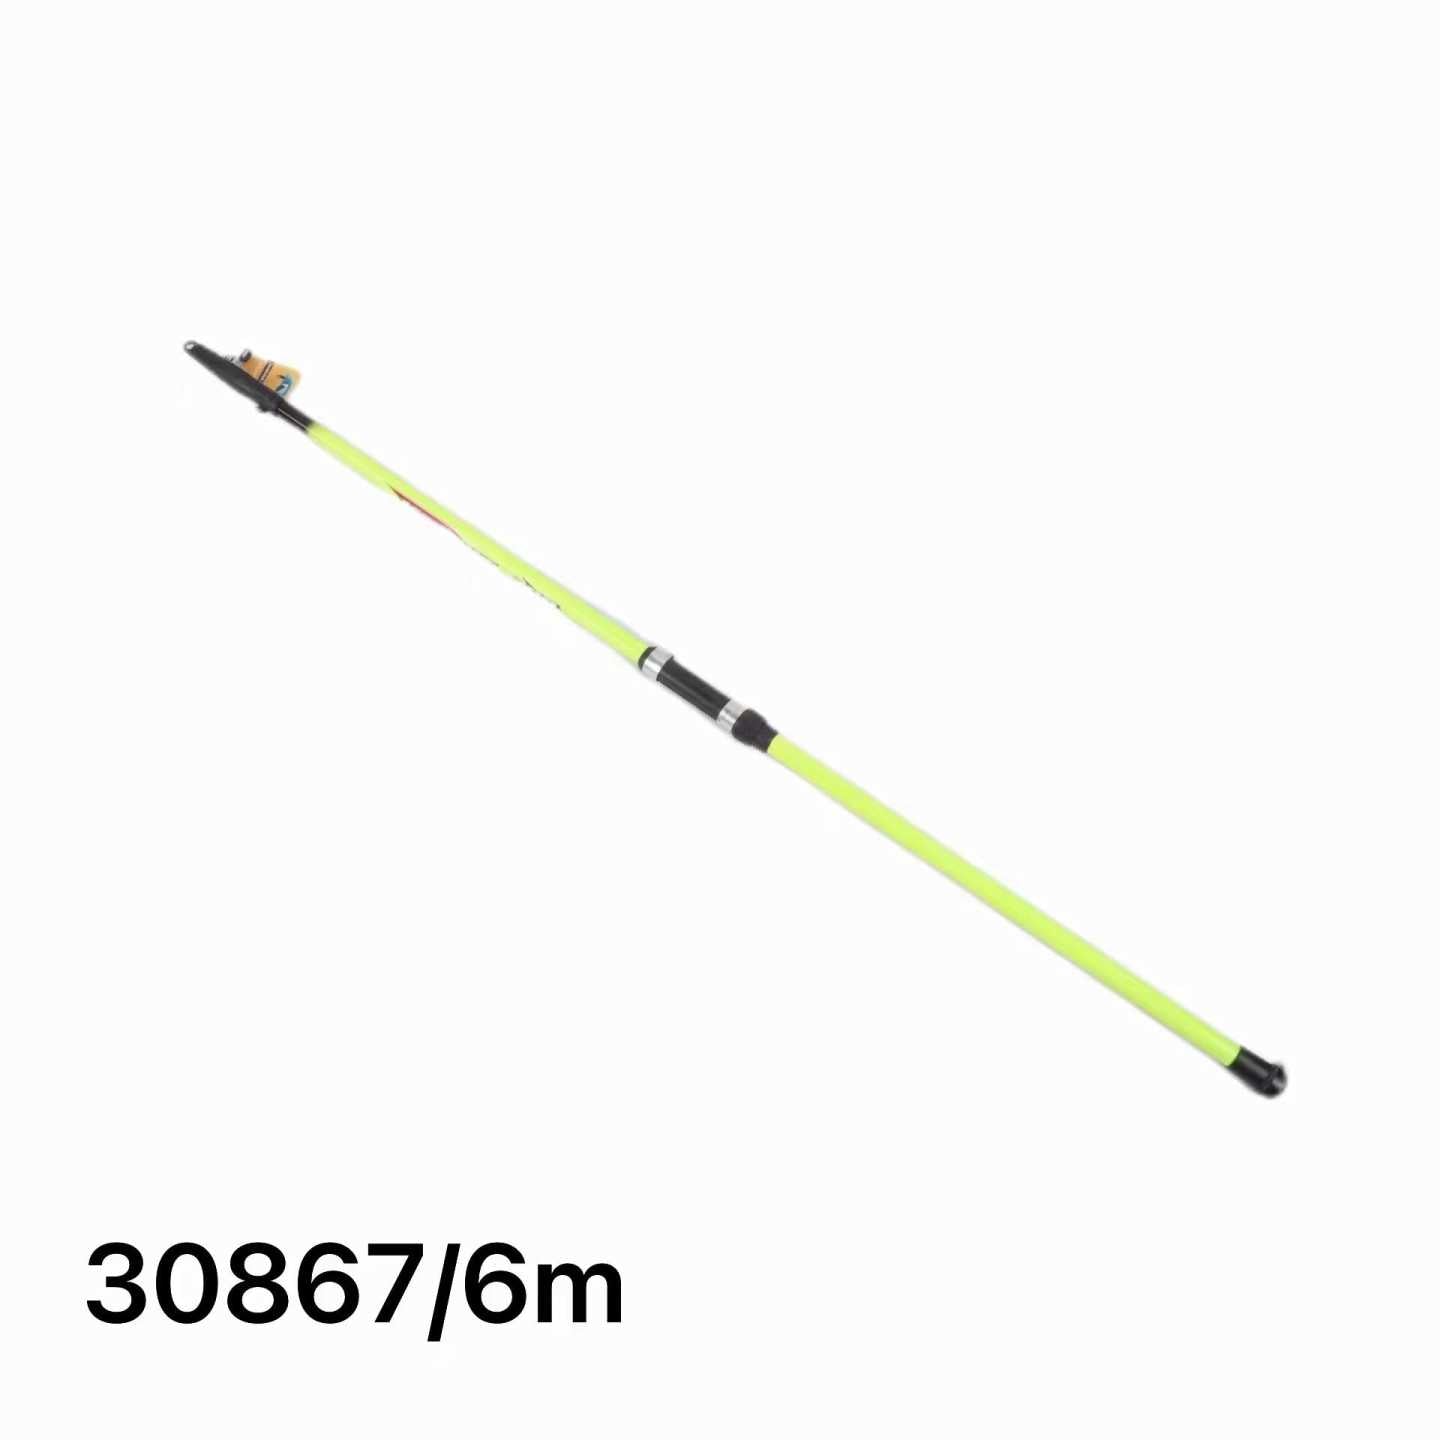 Telescopic fishing rod - 6m - 30867